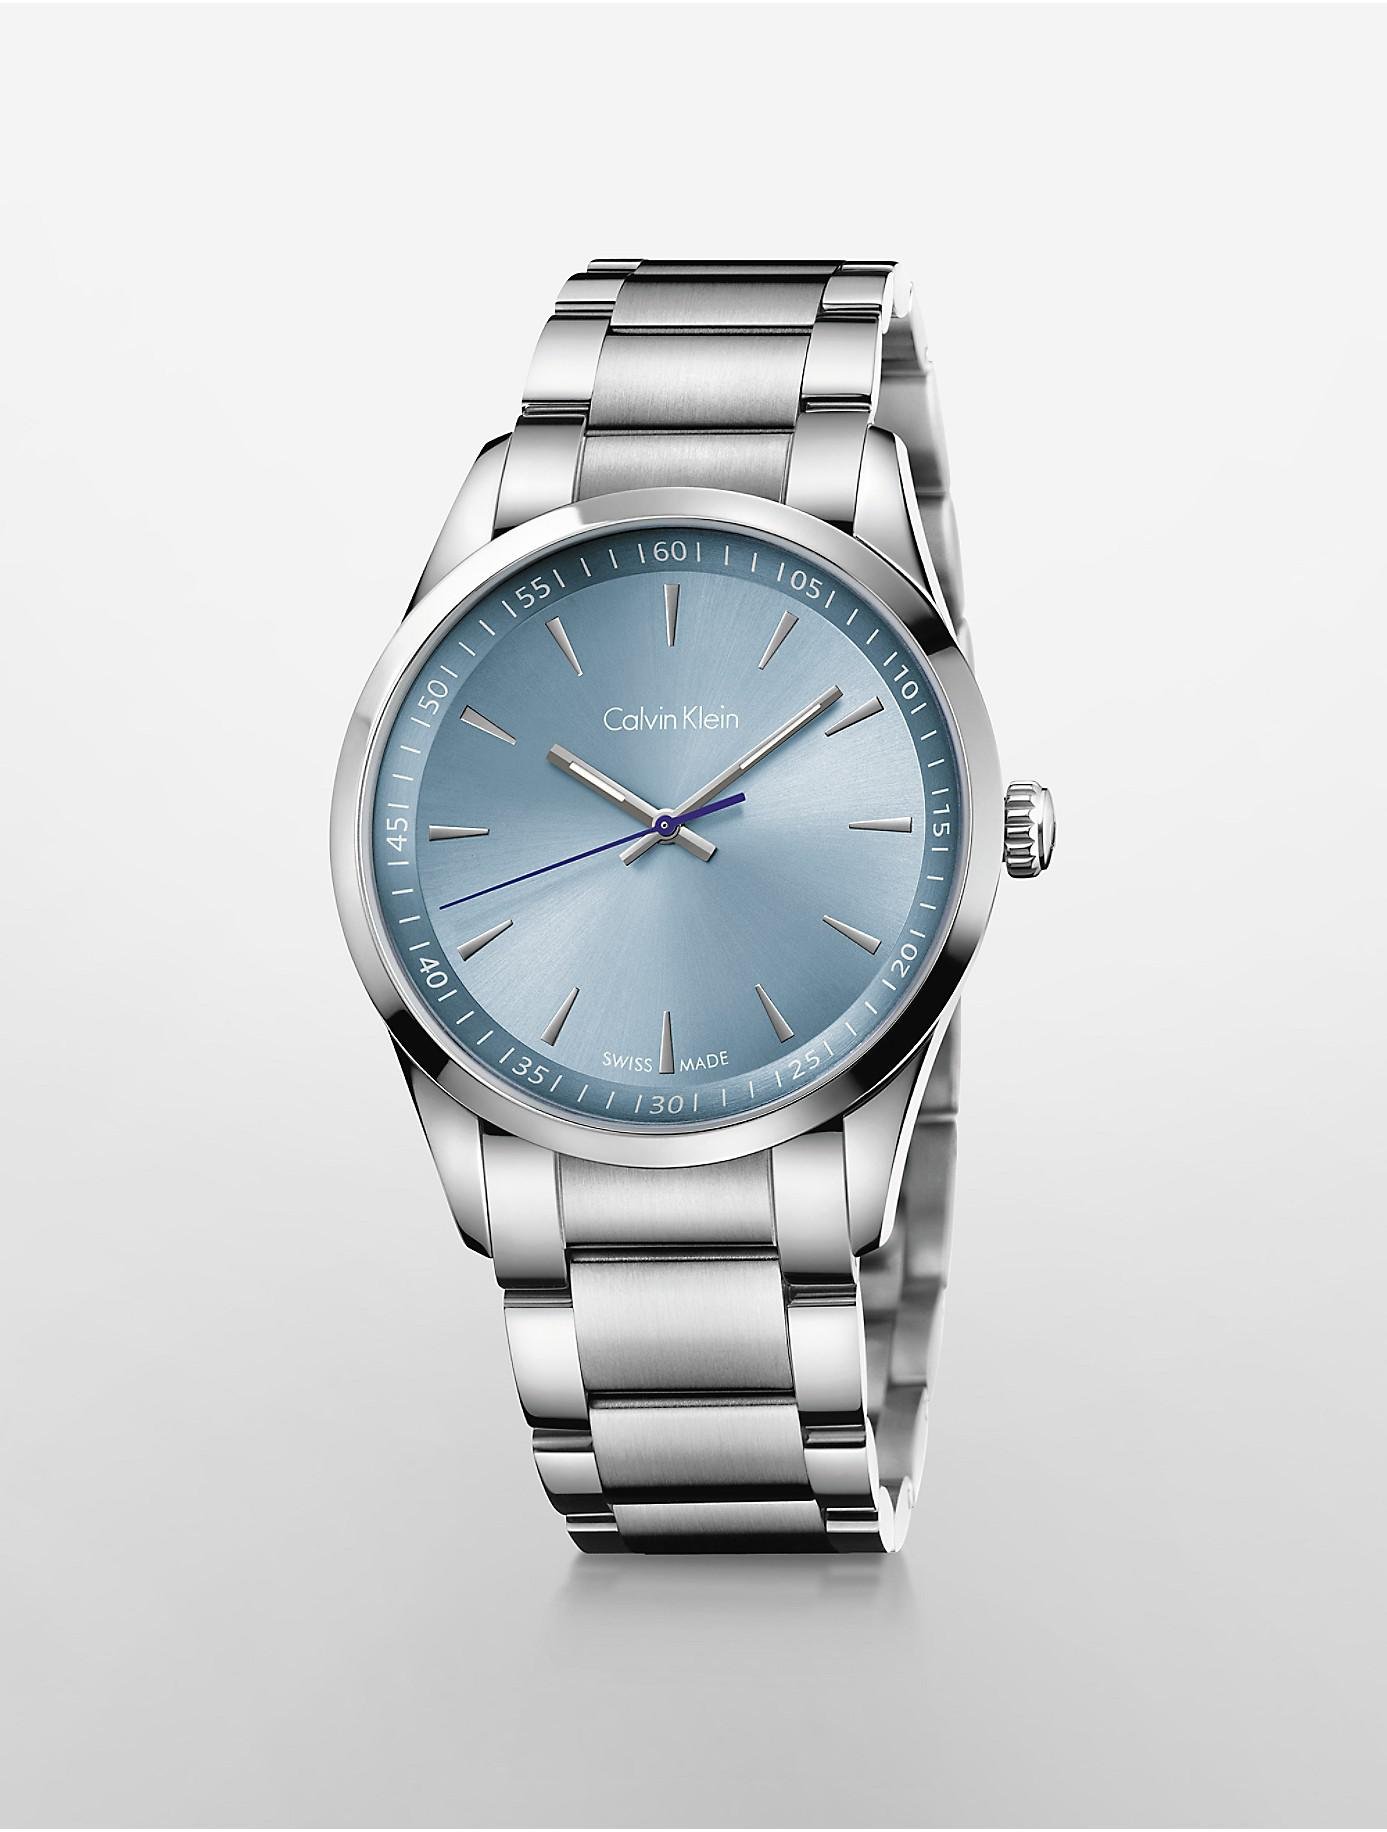 Calvin Klein Blue Dial Watch | vlr.eng.br